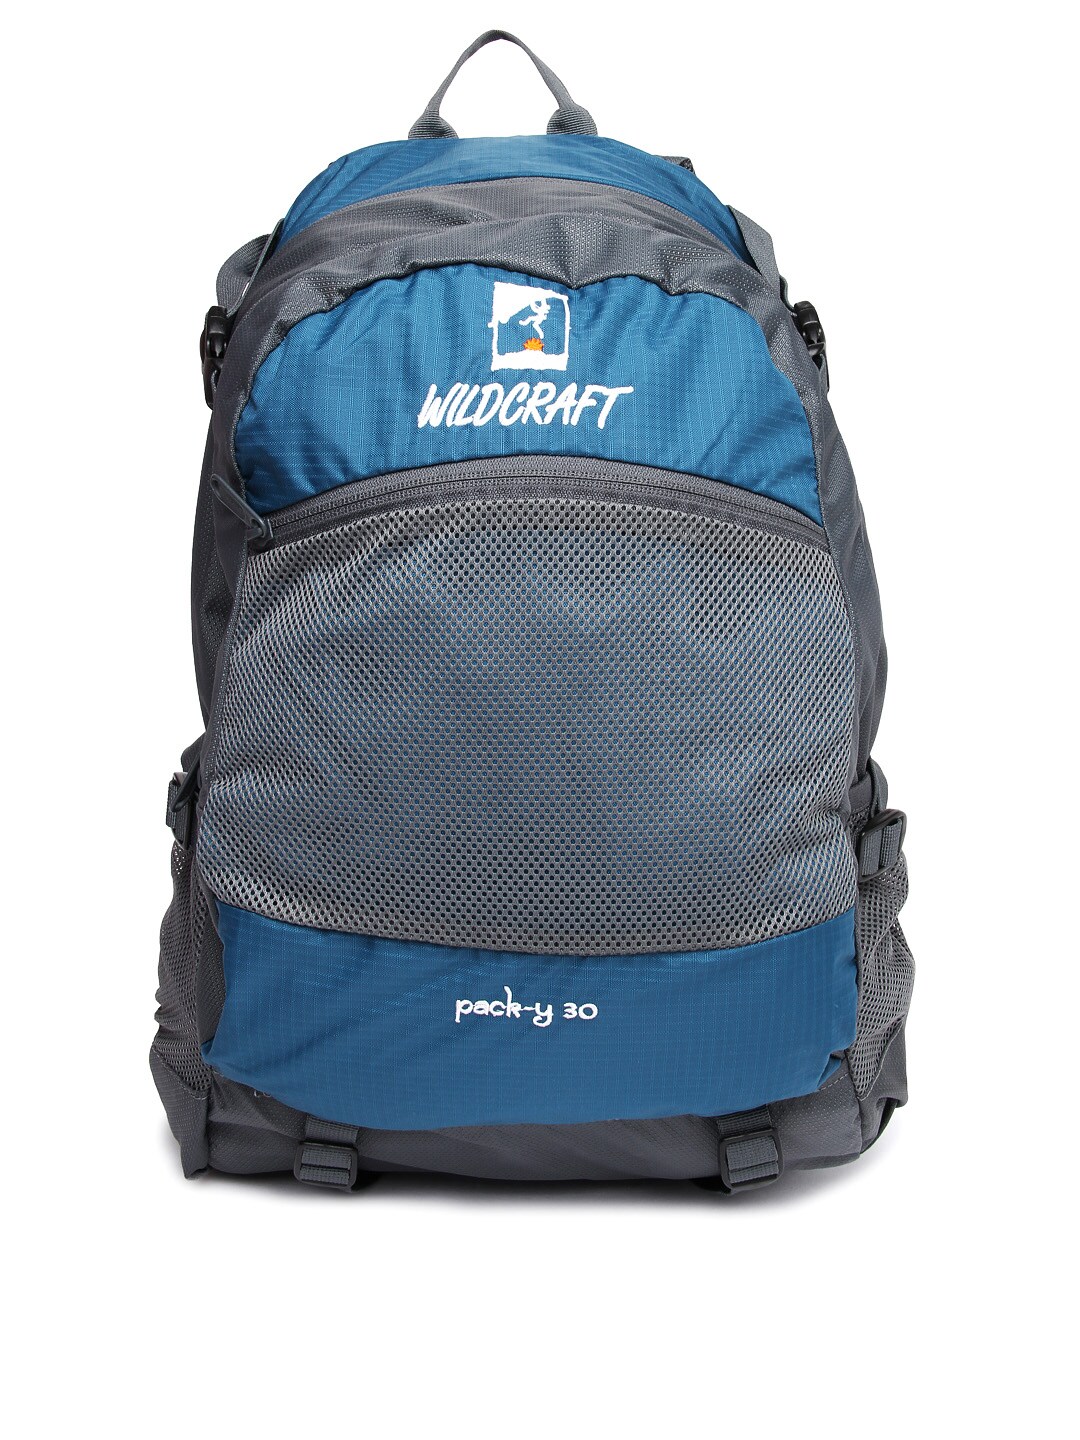 Wildcraft Unisex Teal Blue & Grey Backpack